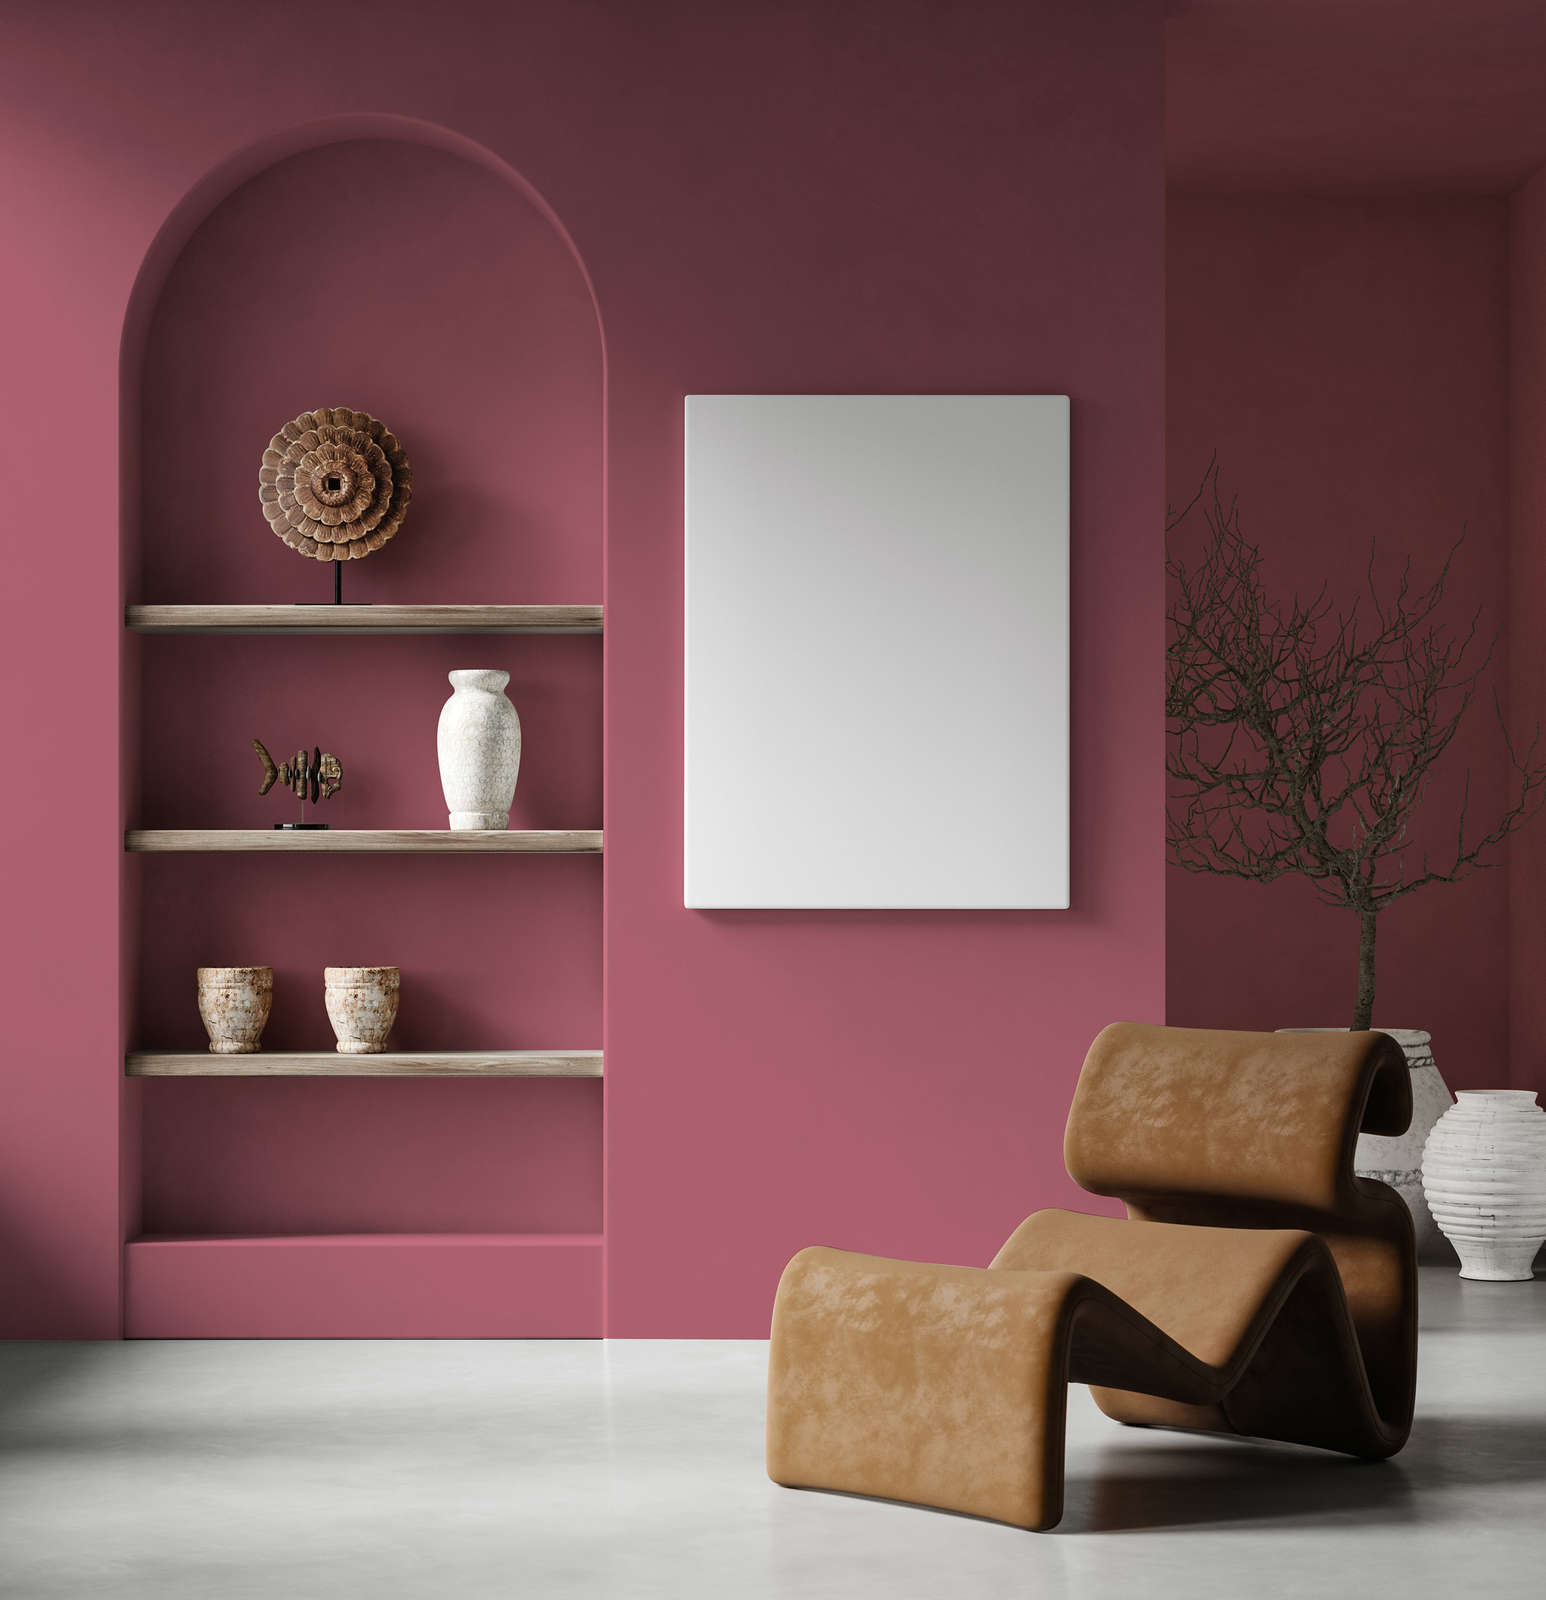             Pittura murale Premium Rosa scuro rinfrescante »Blooming Blossom« NW1018 – 2,5 litri
        